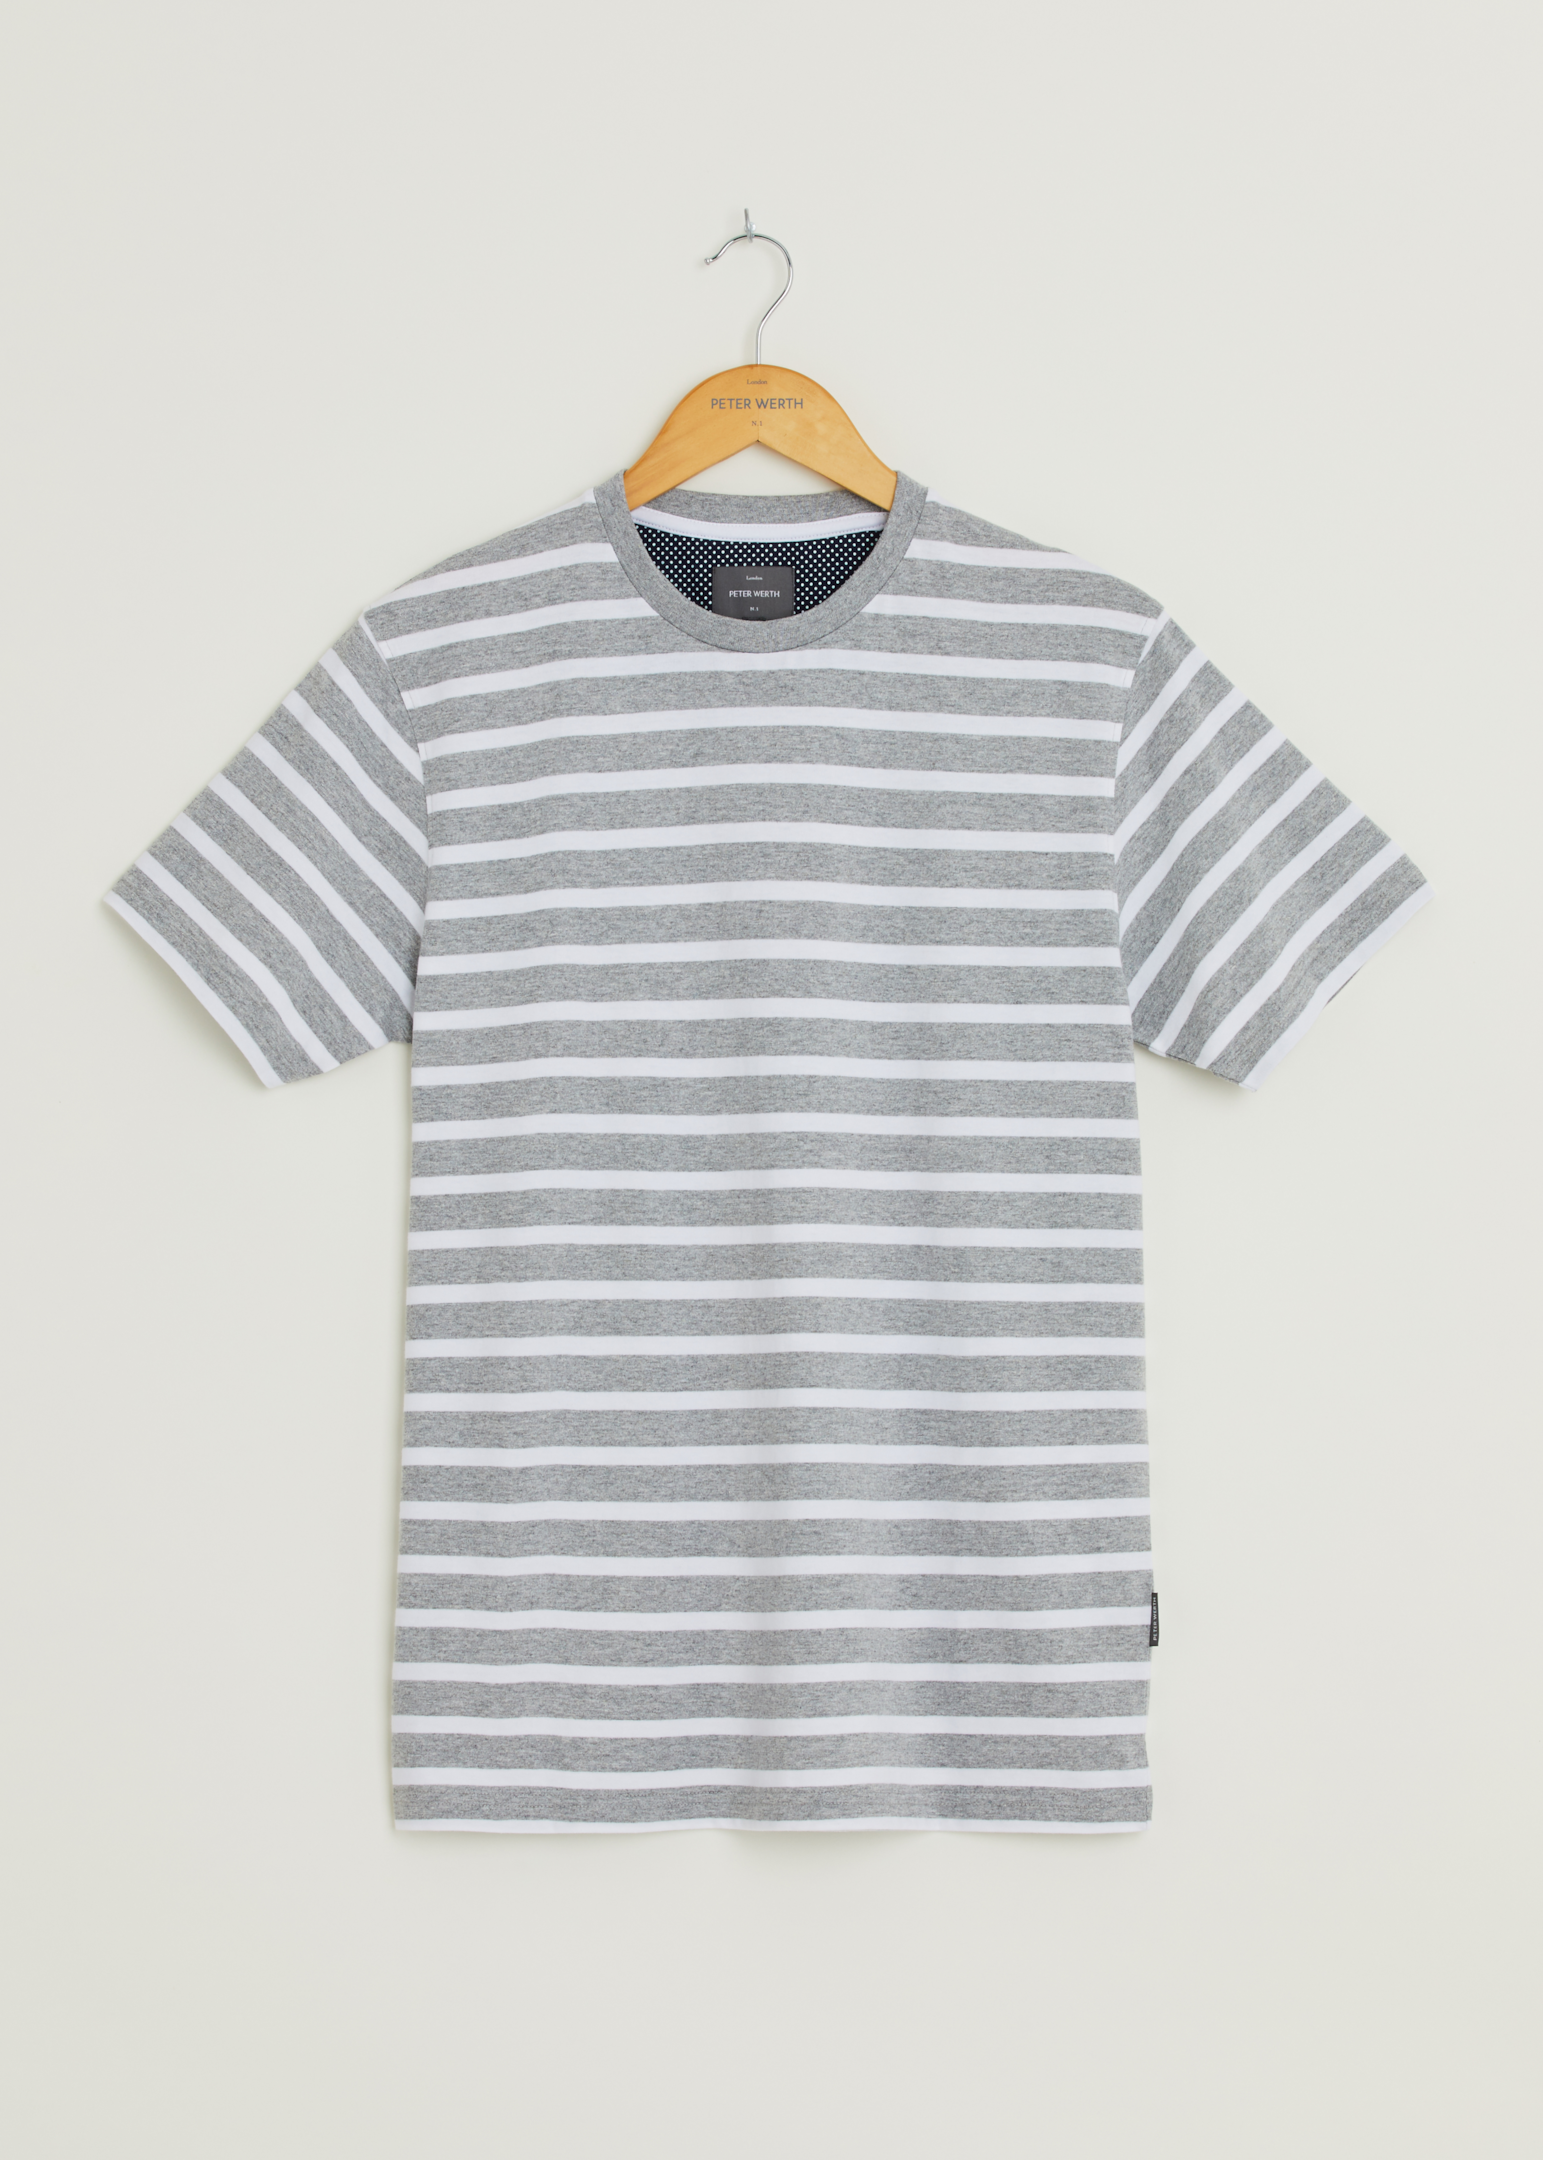 grey/white striped short sleeved t-shirt